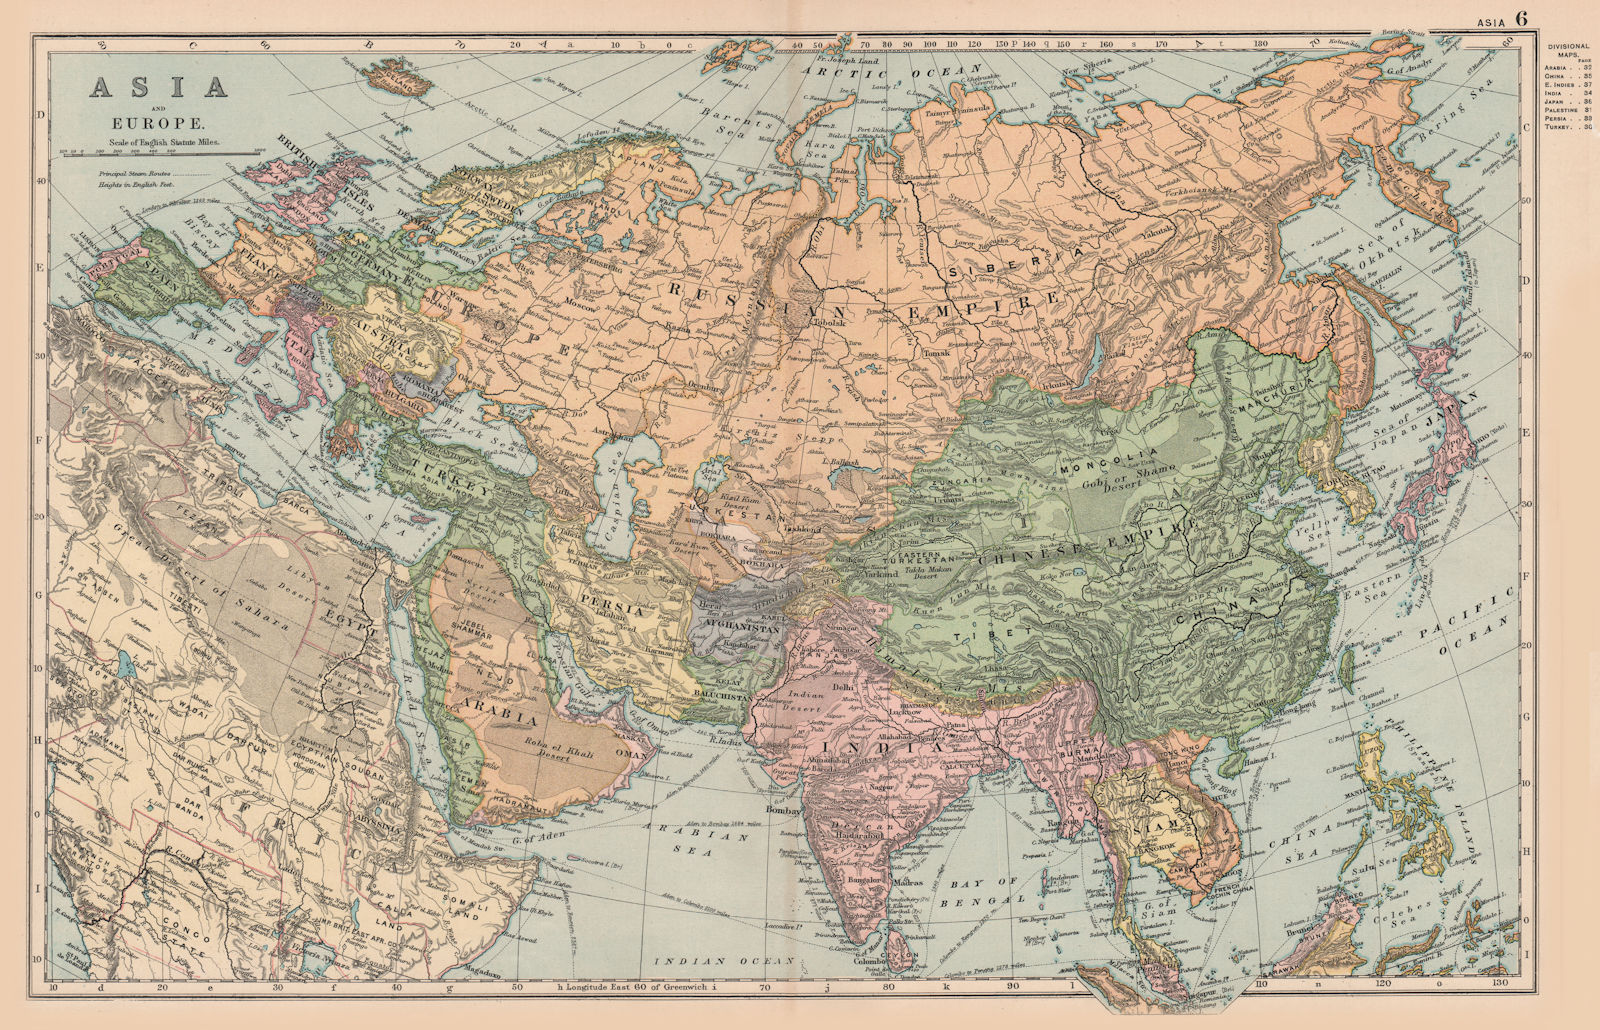 ASIA EUROPE. Political Siam Persia (Iran) Ottoman emp. Indochina. BACON 1893 map